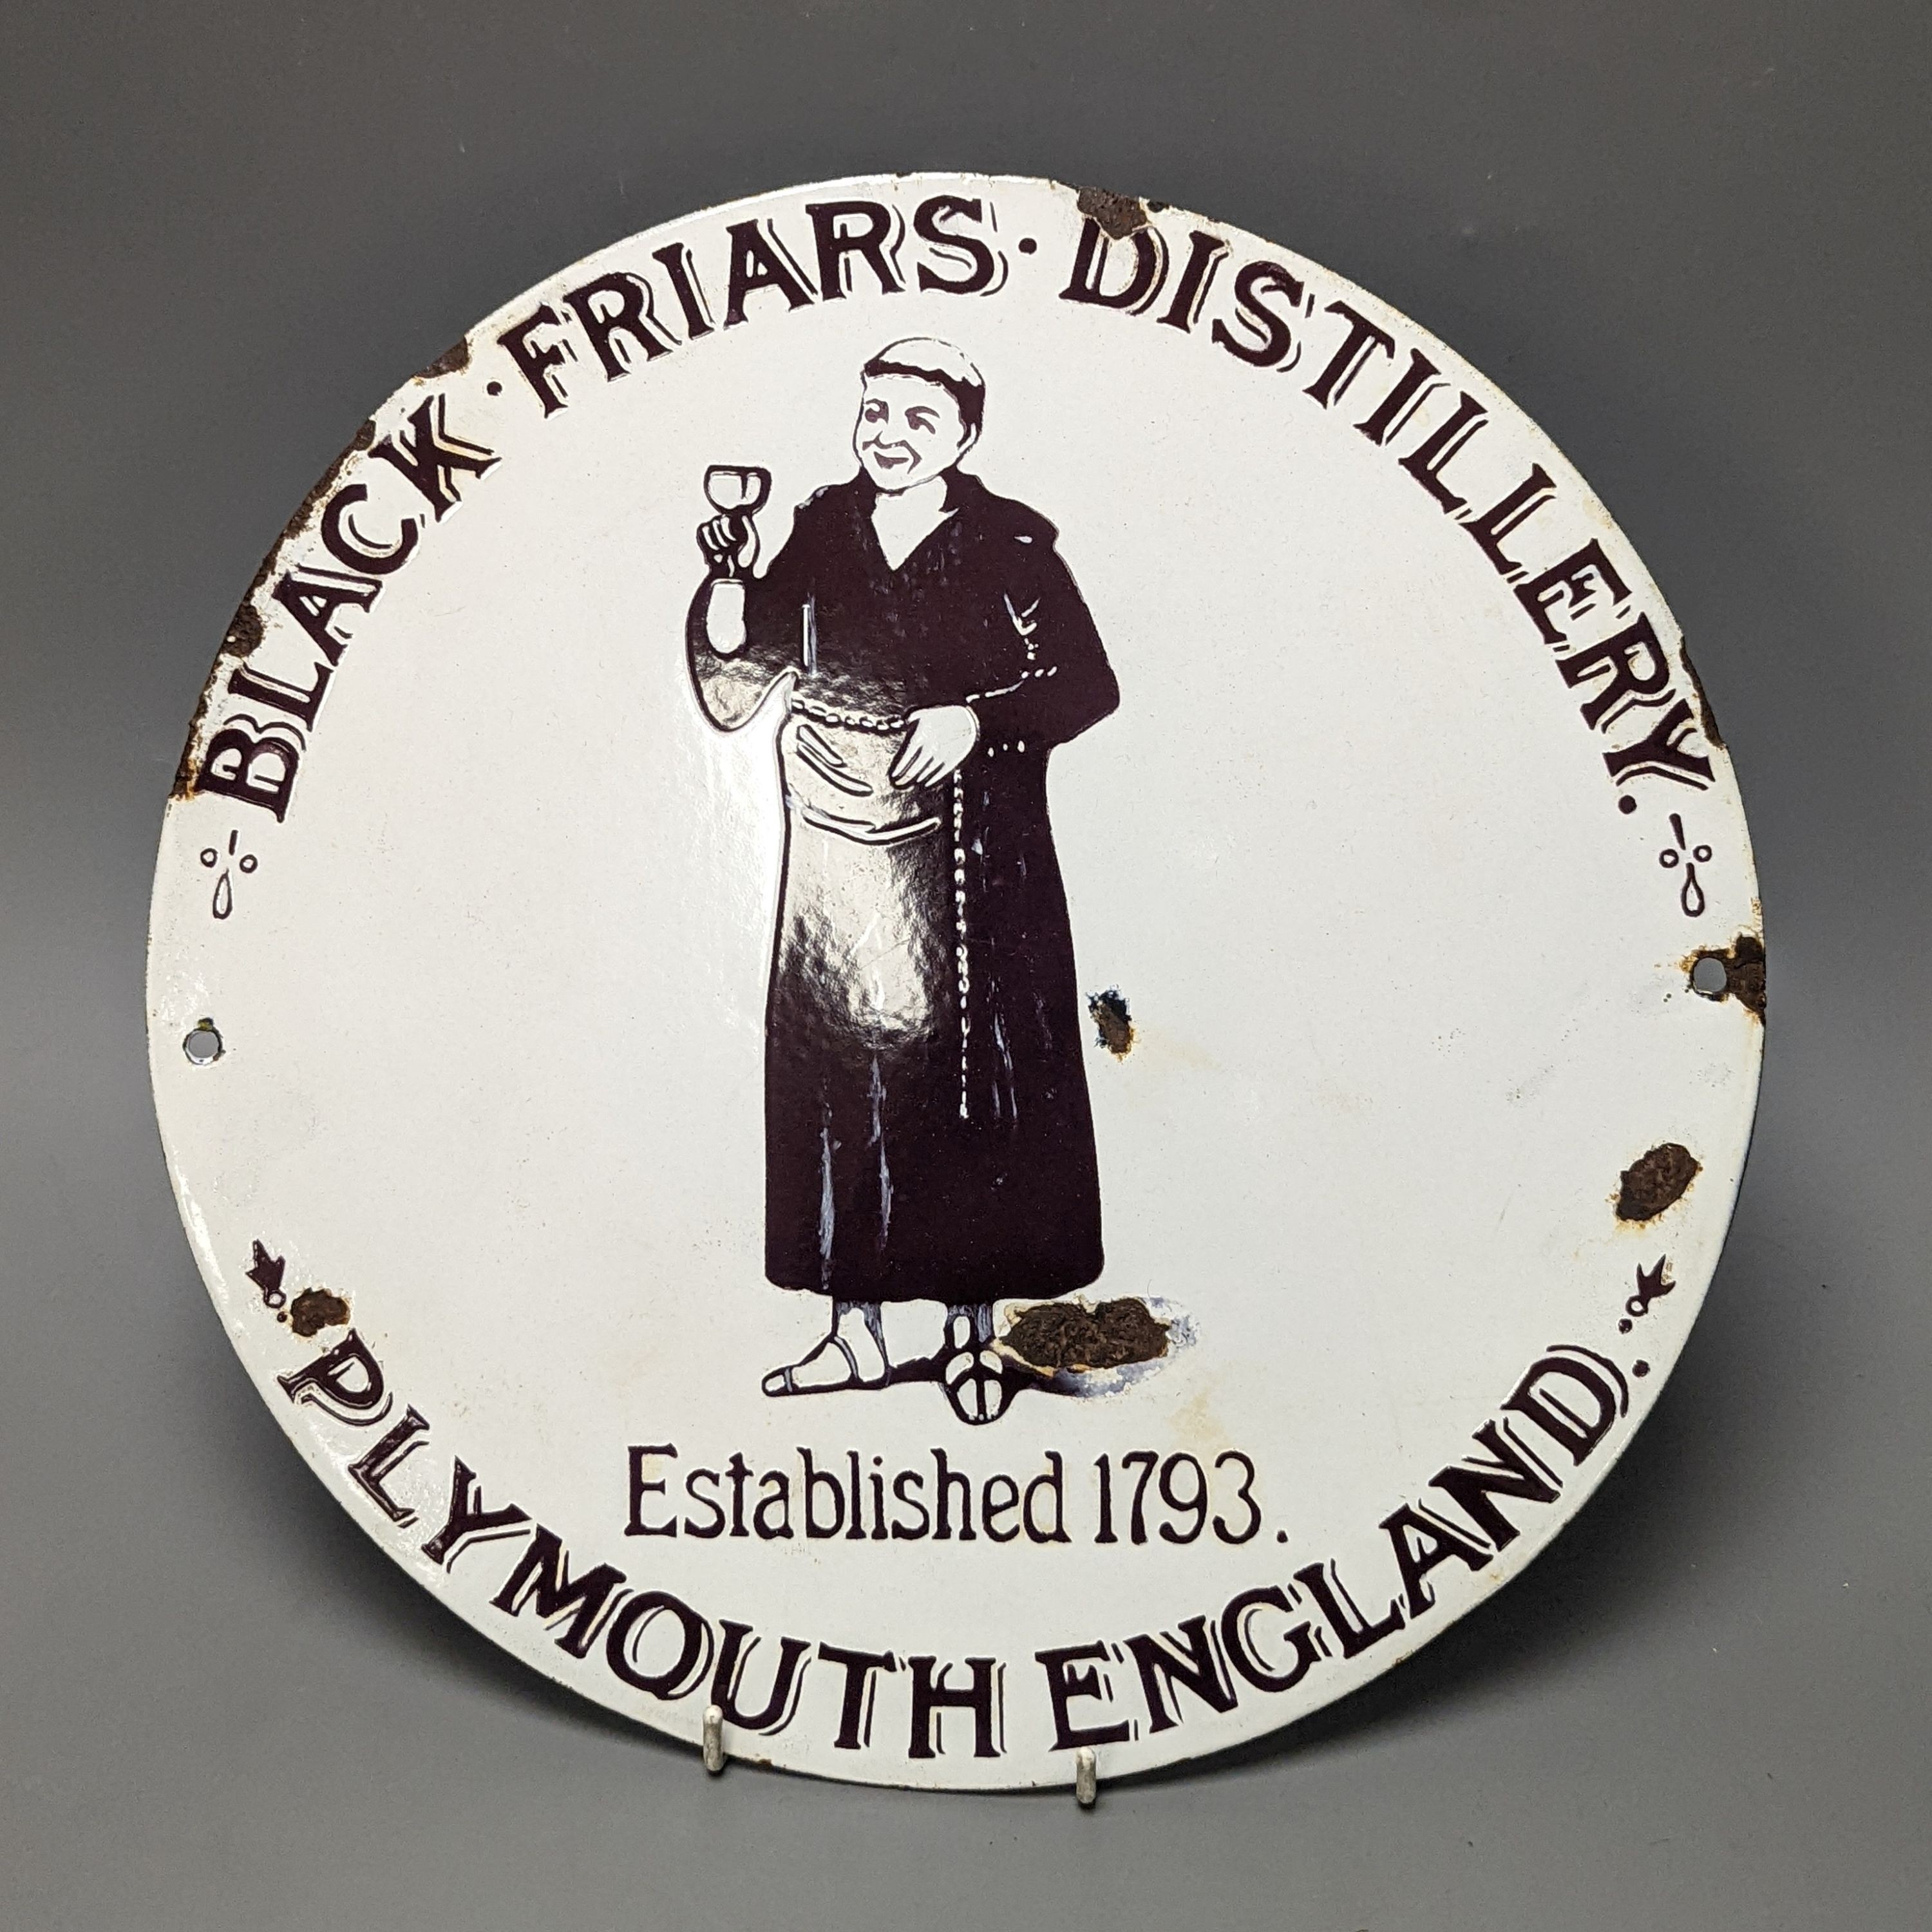 A Blackfriars Distillery enamelled sign., 32 cms diameter.